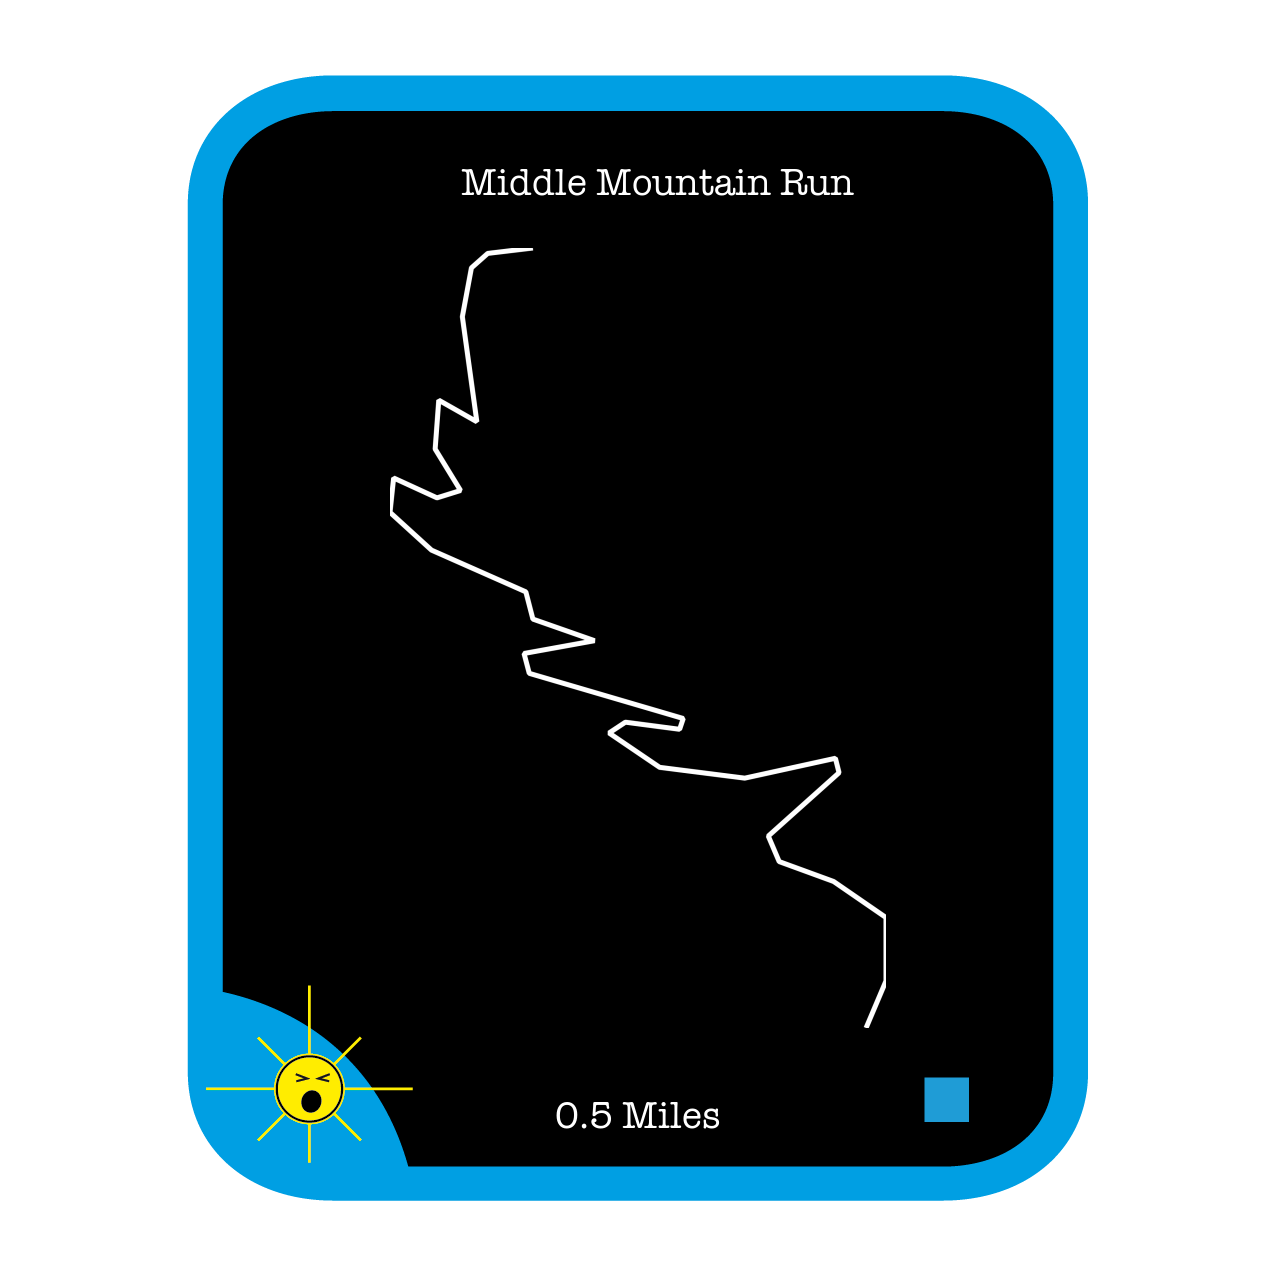 Middle Mountain Run